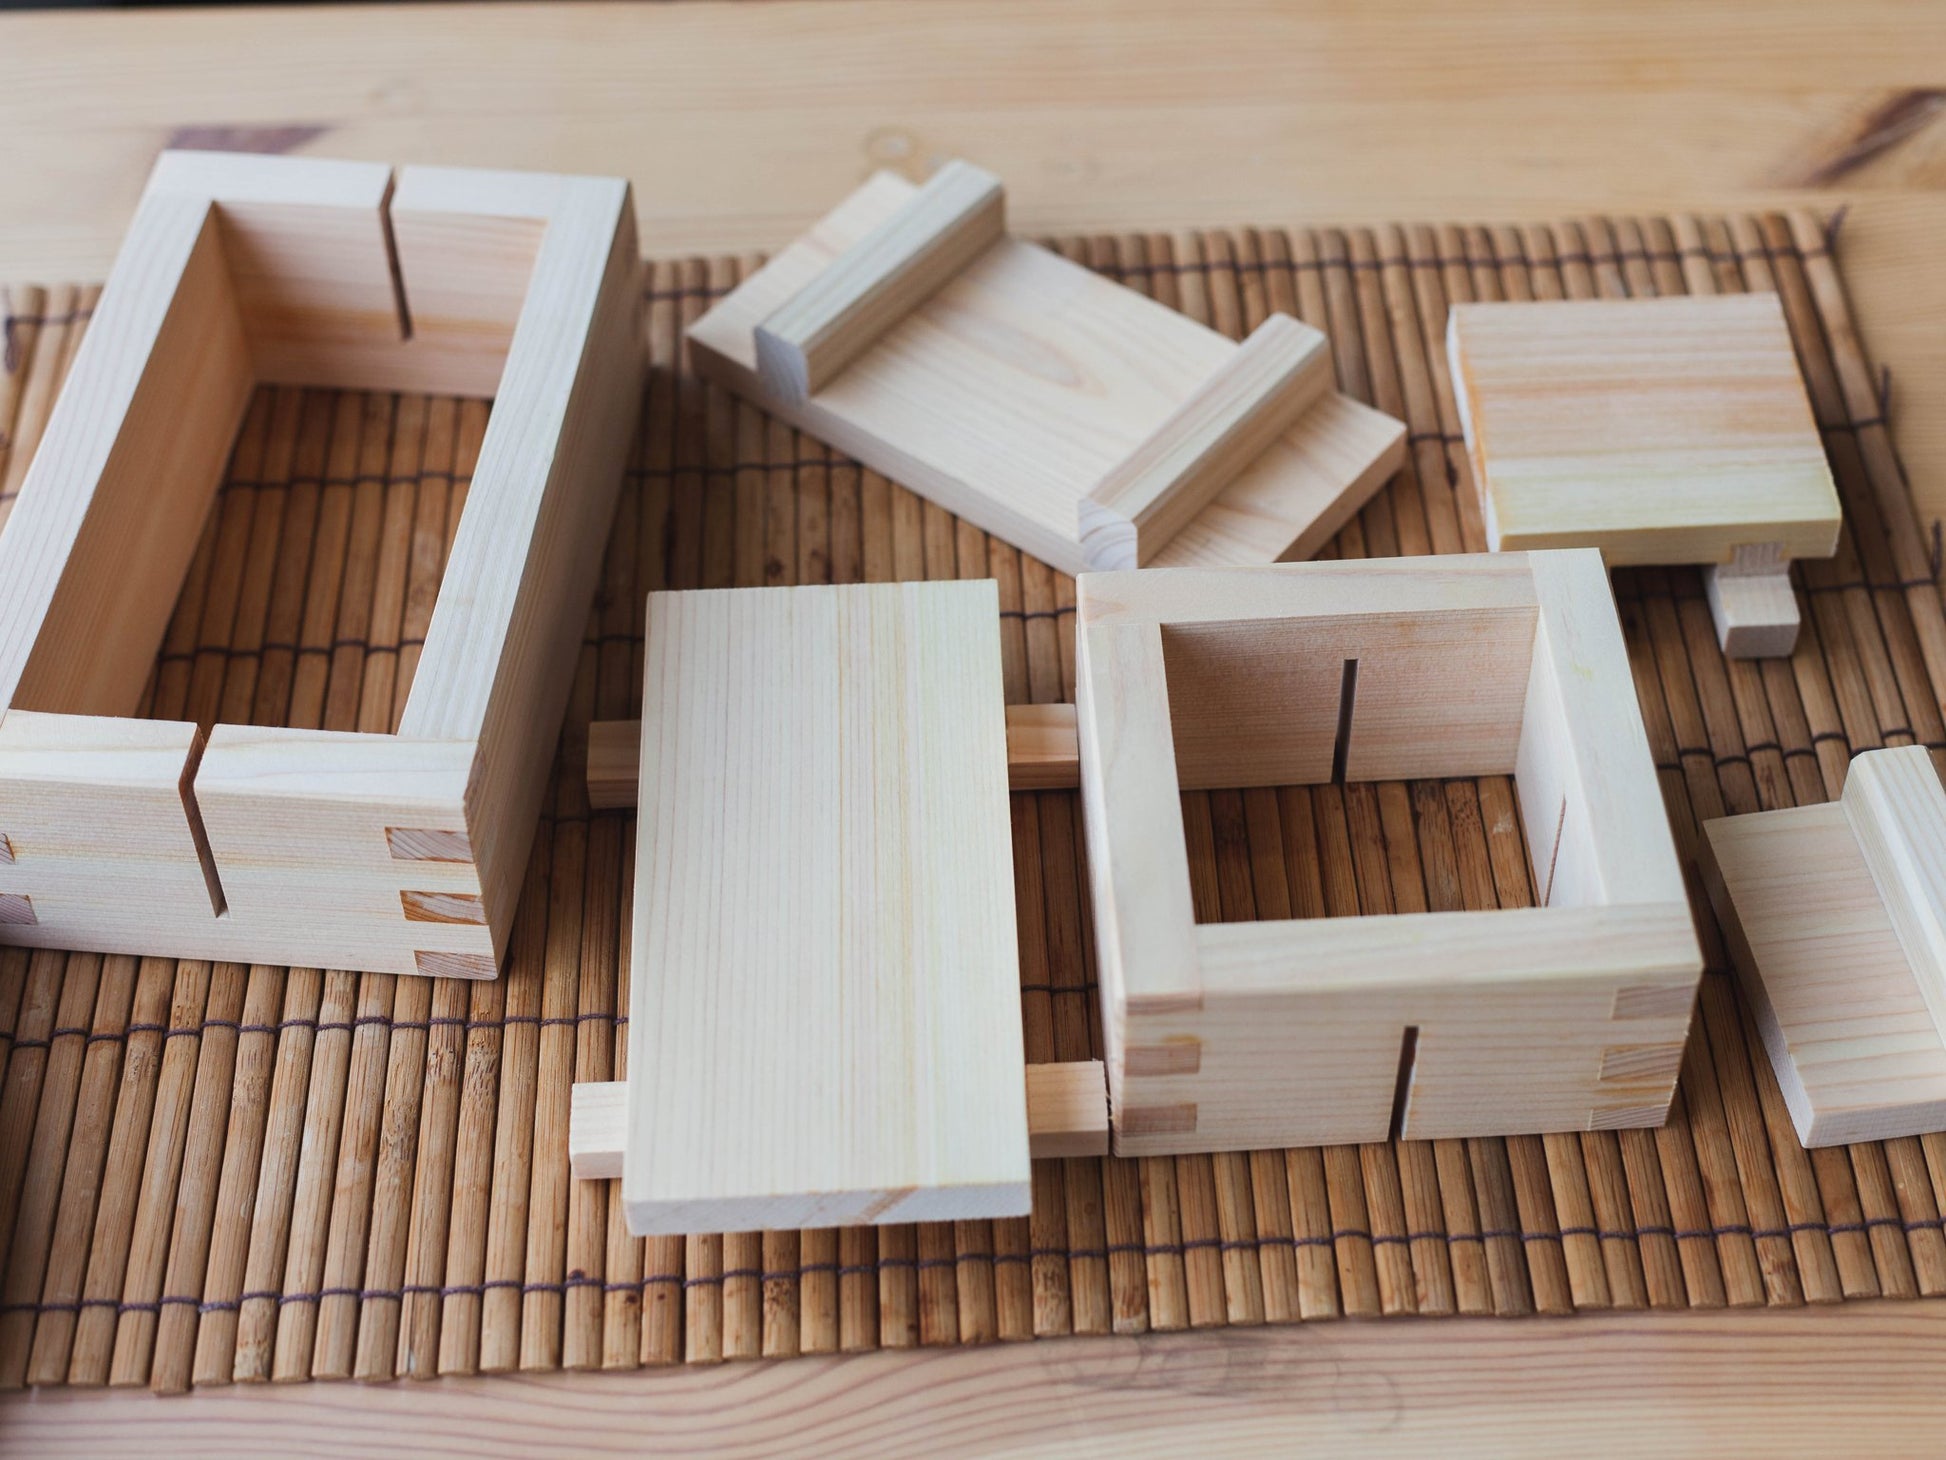 Wooden Rectangular Sushi Press Mold Box Sushi Making Kit DIY Sushi